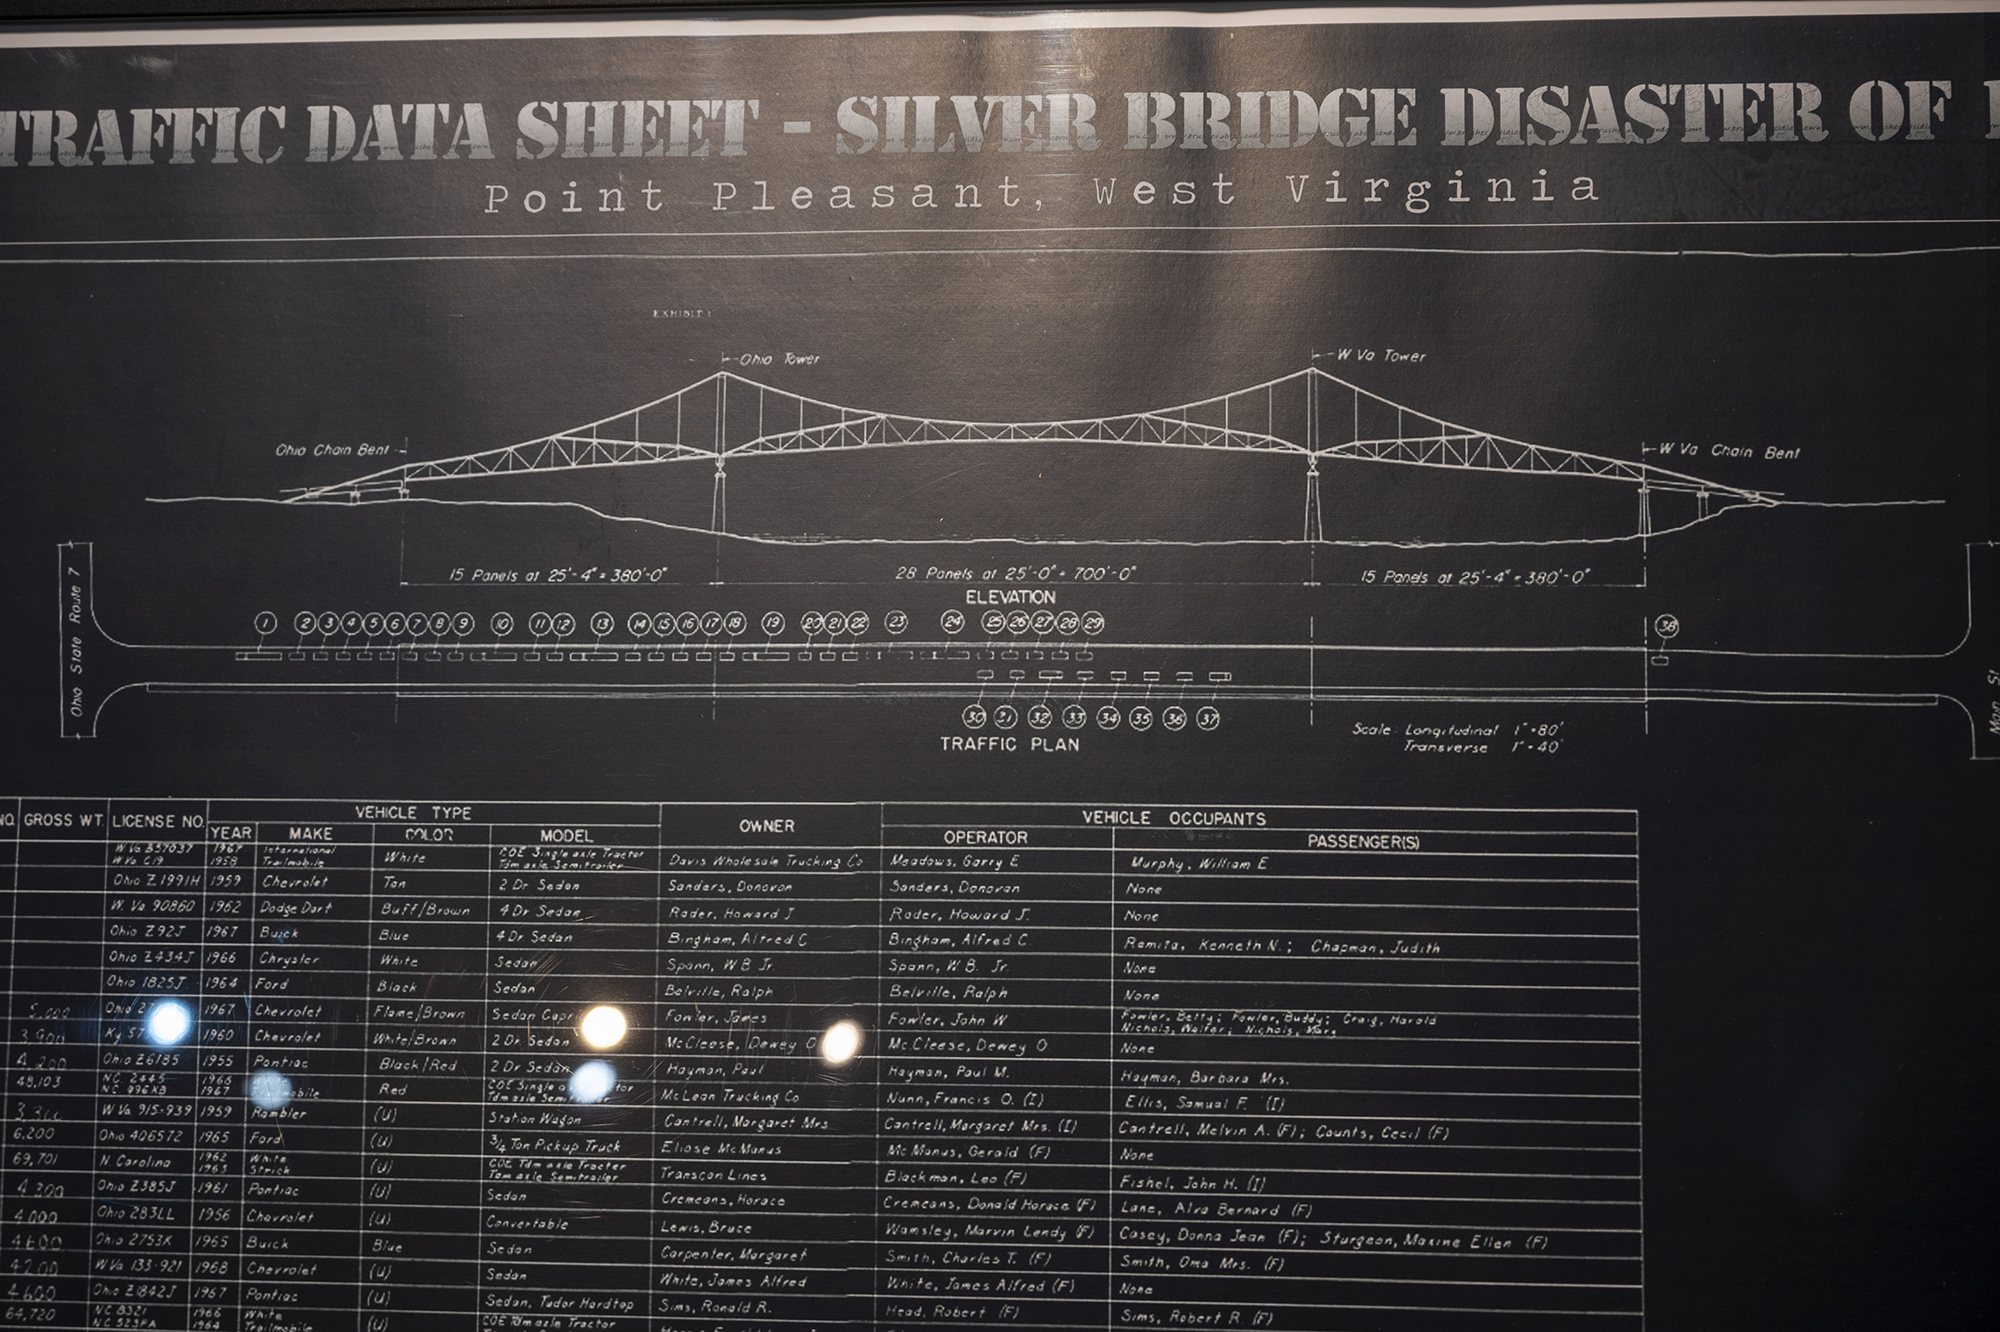 An image detailing the Silver Bridge